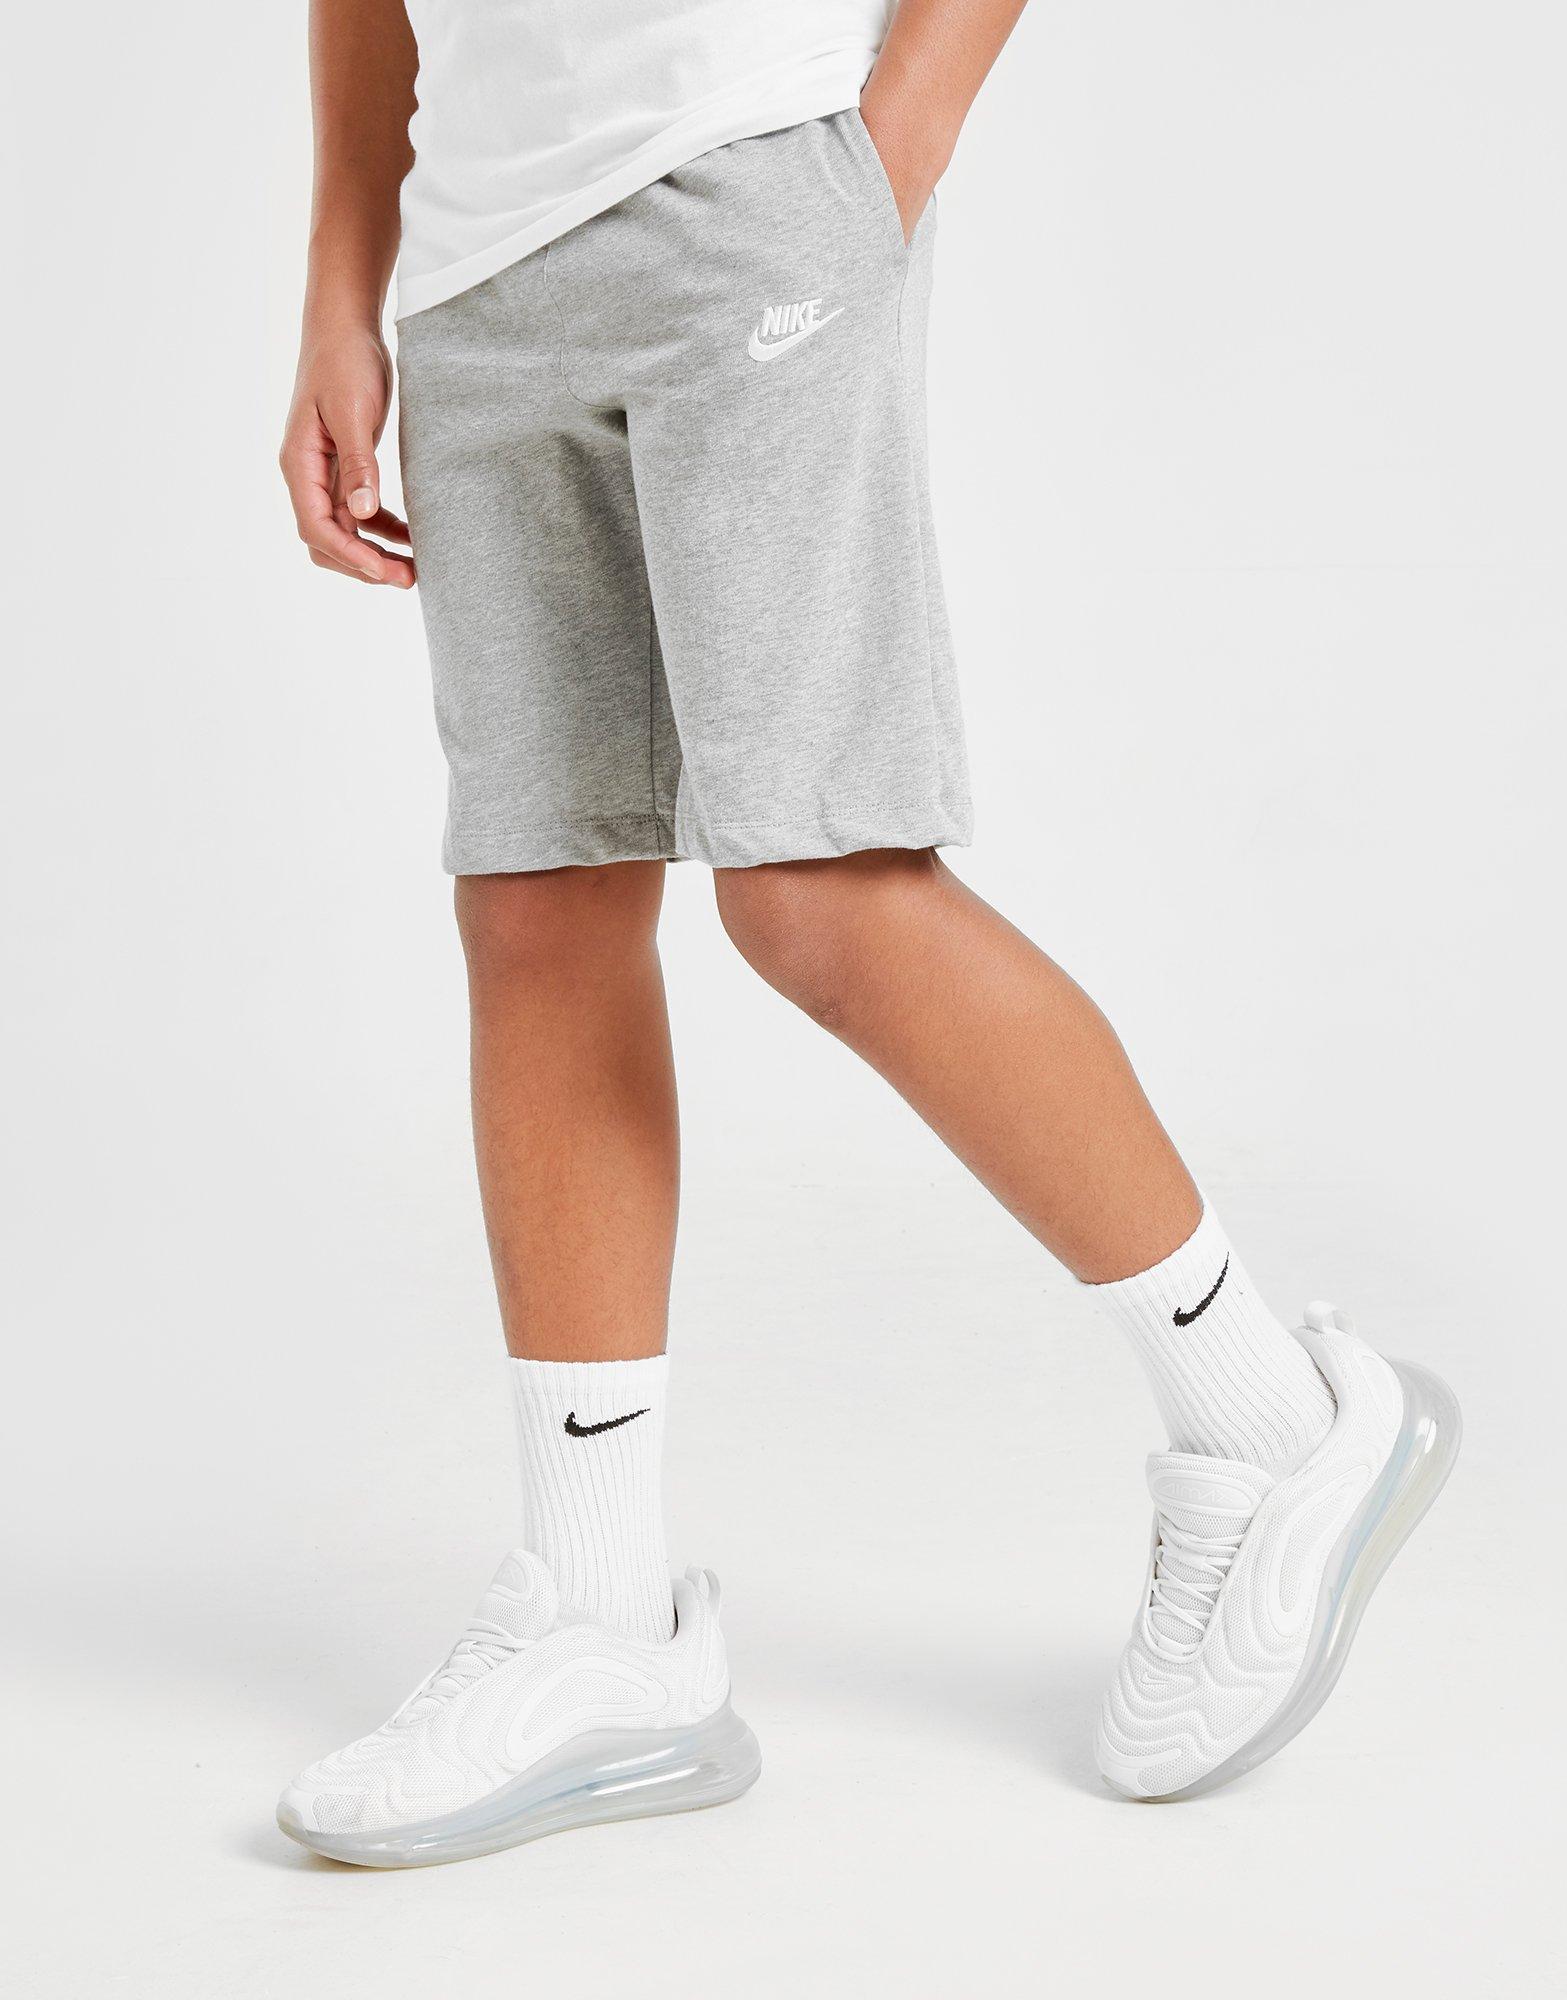 nike gray cotton shorts